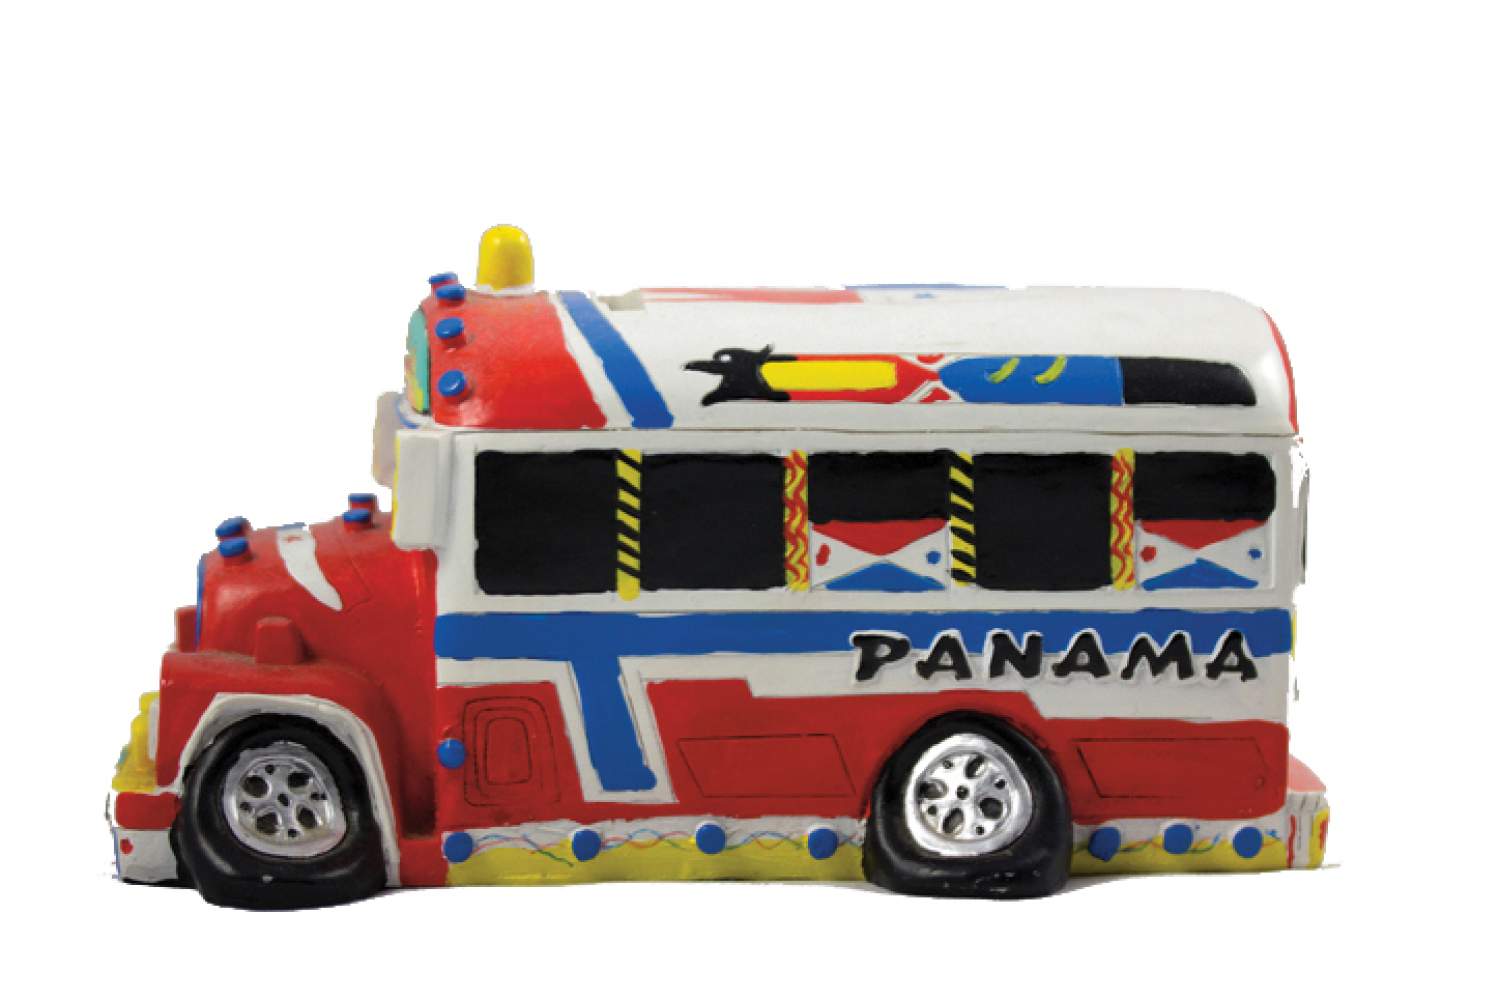 Reproduction of one of the Diablos Rojos, Panamien school buses